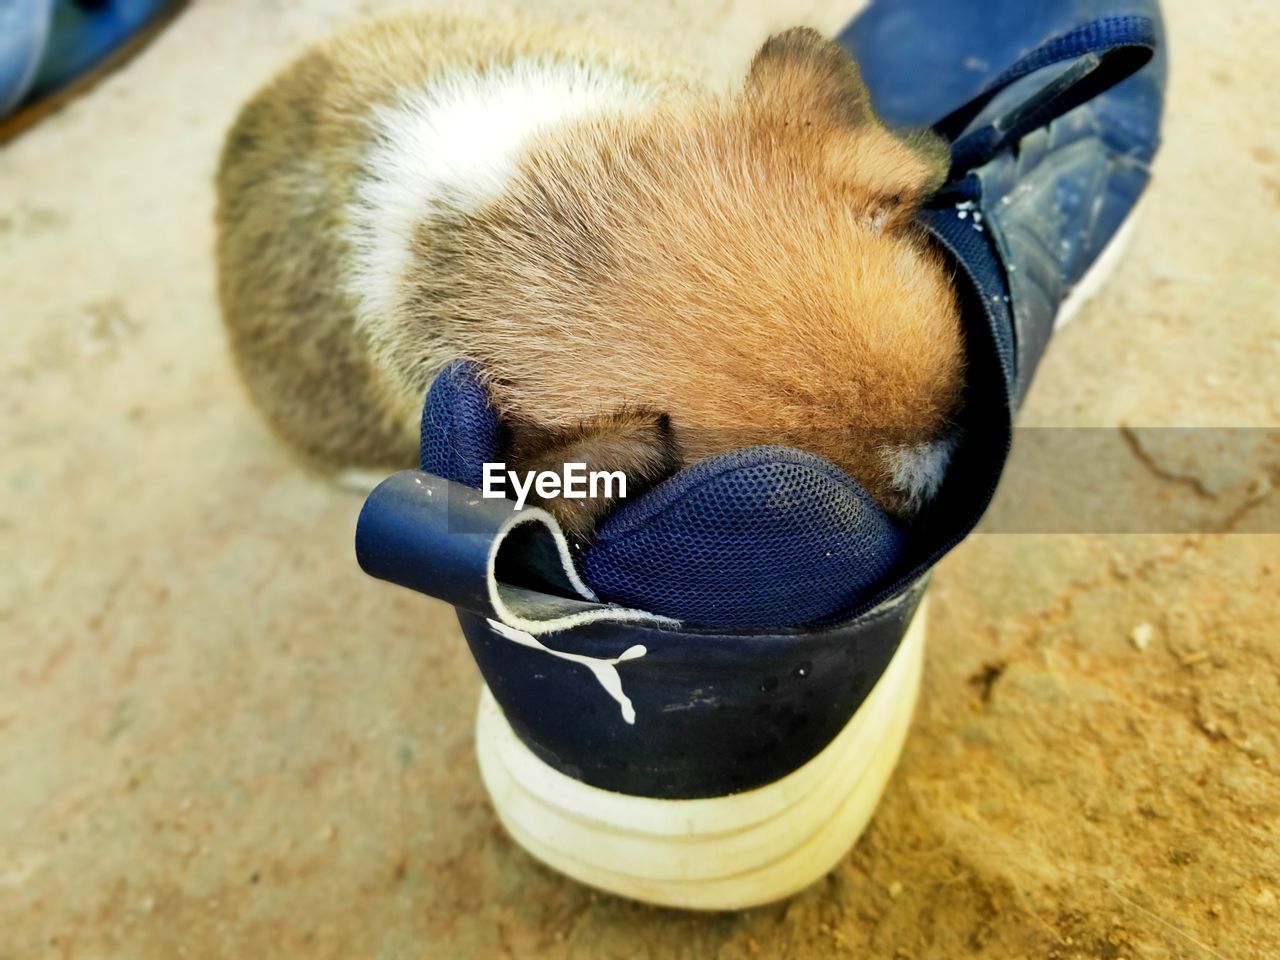 Cute pitbull sleeping inside shoe